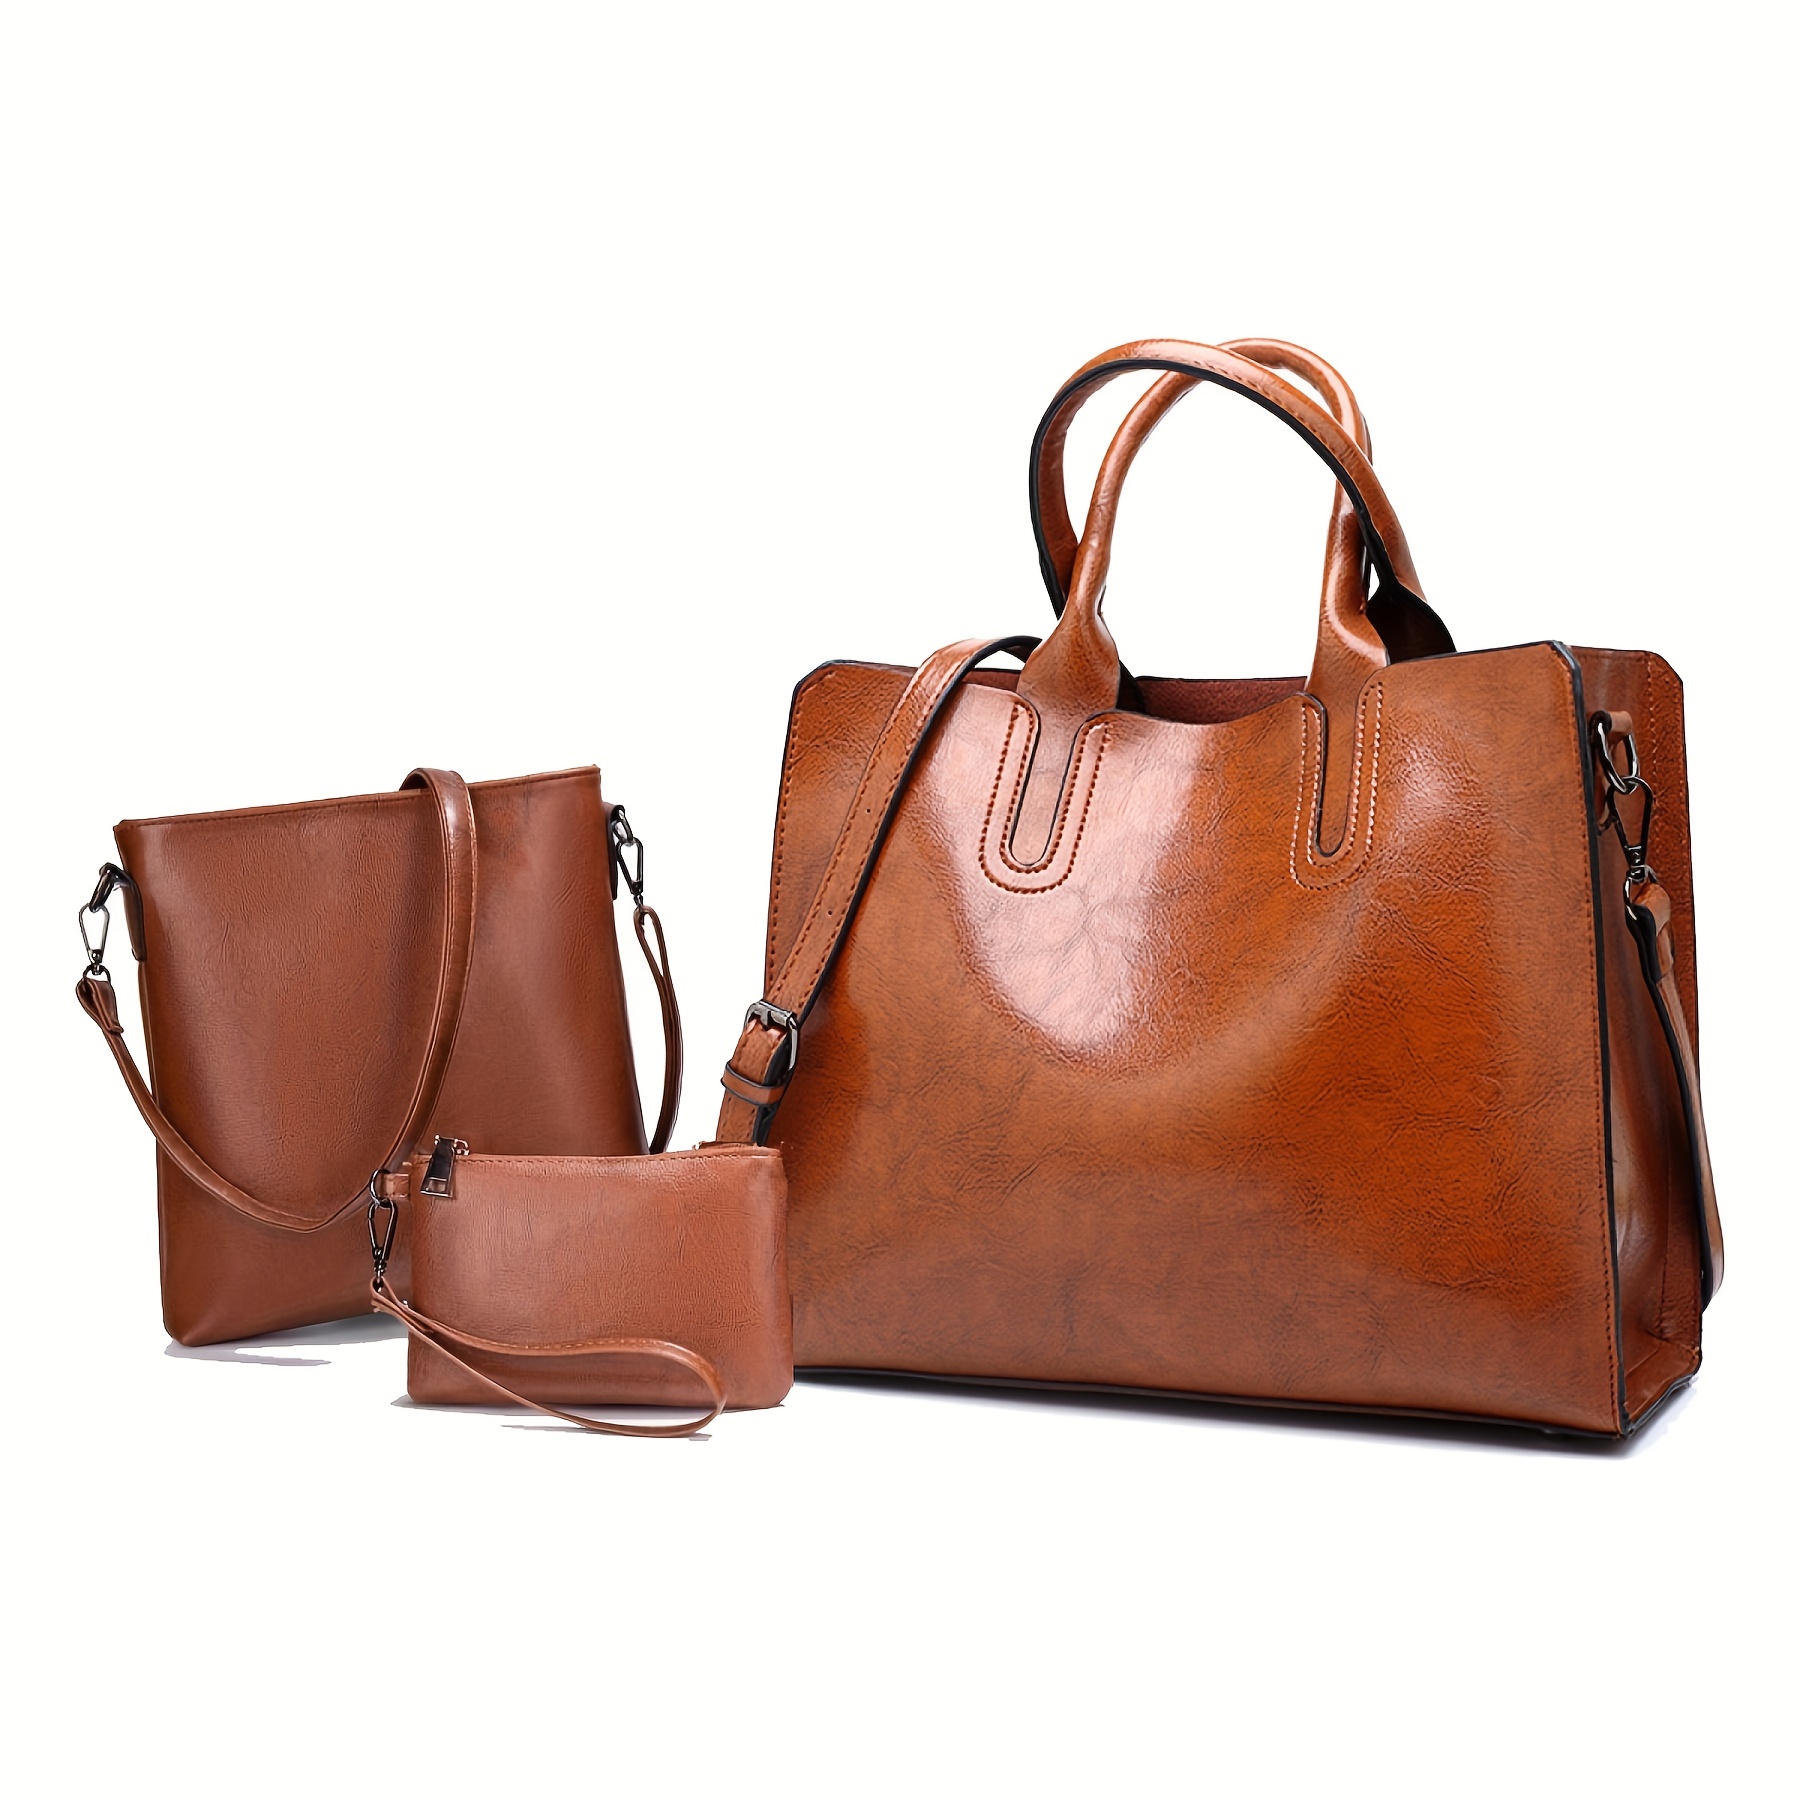 Fashion Spain Women Luxury Totes Bag Large Neoprene Shoulder Bag